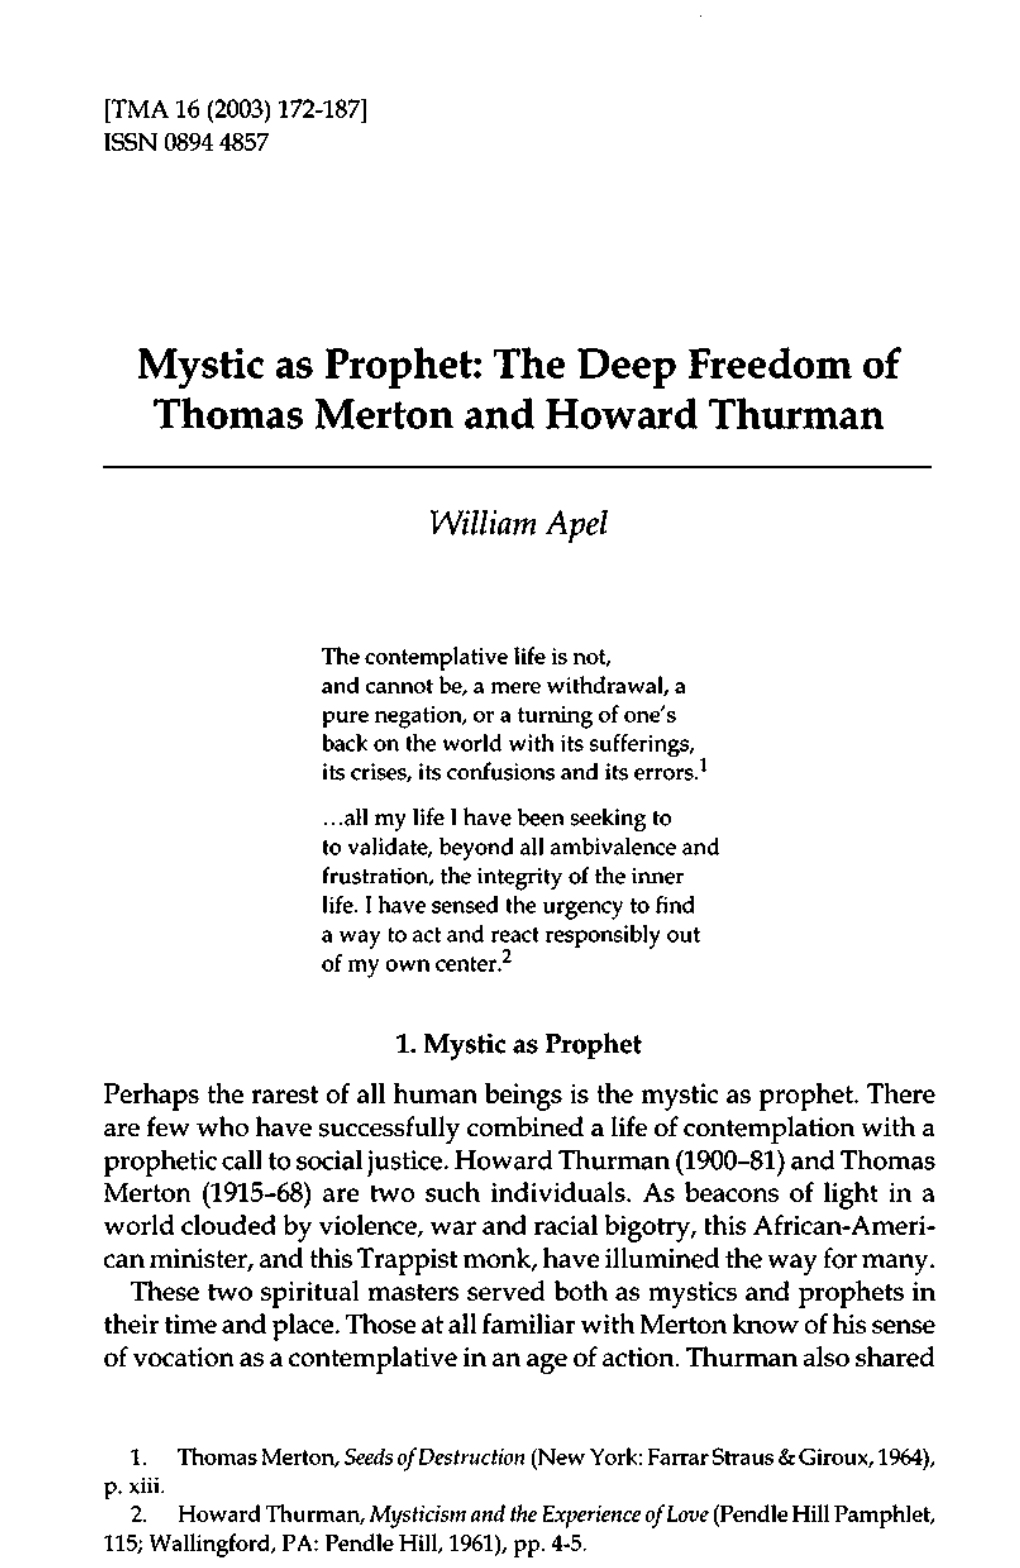 The Deep Freedom of Thomas Merton and Howard Thurman